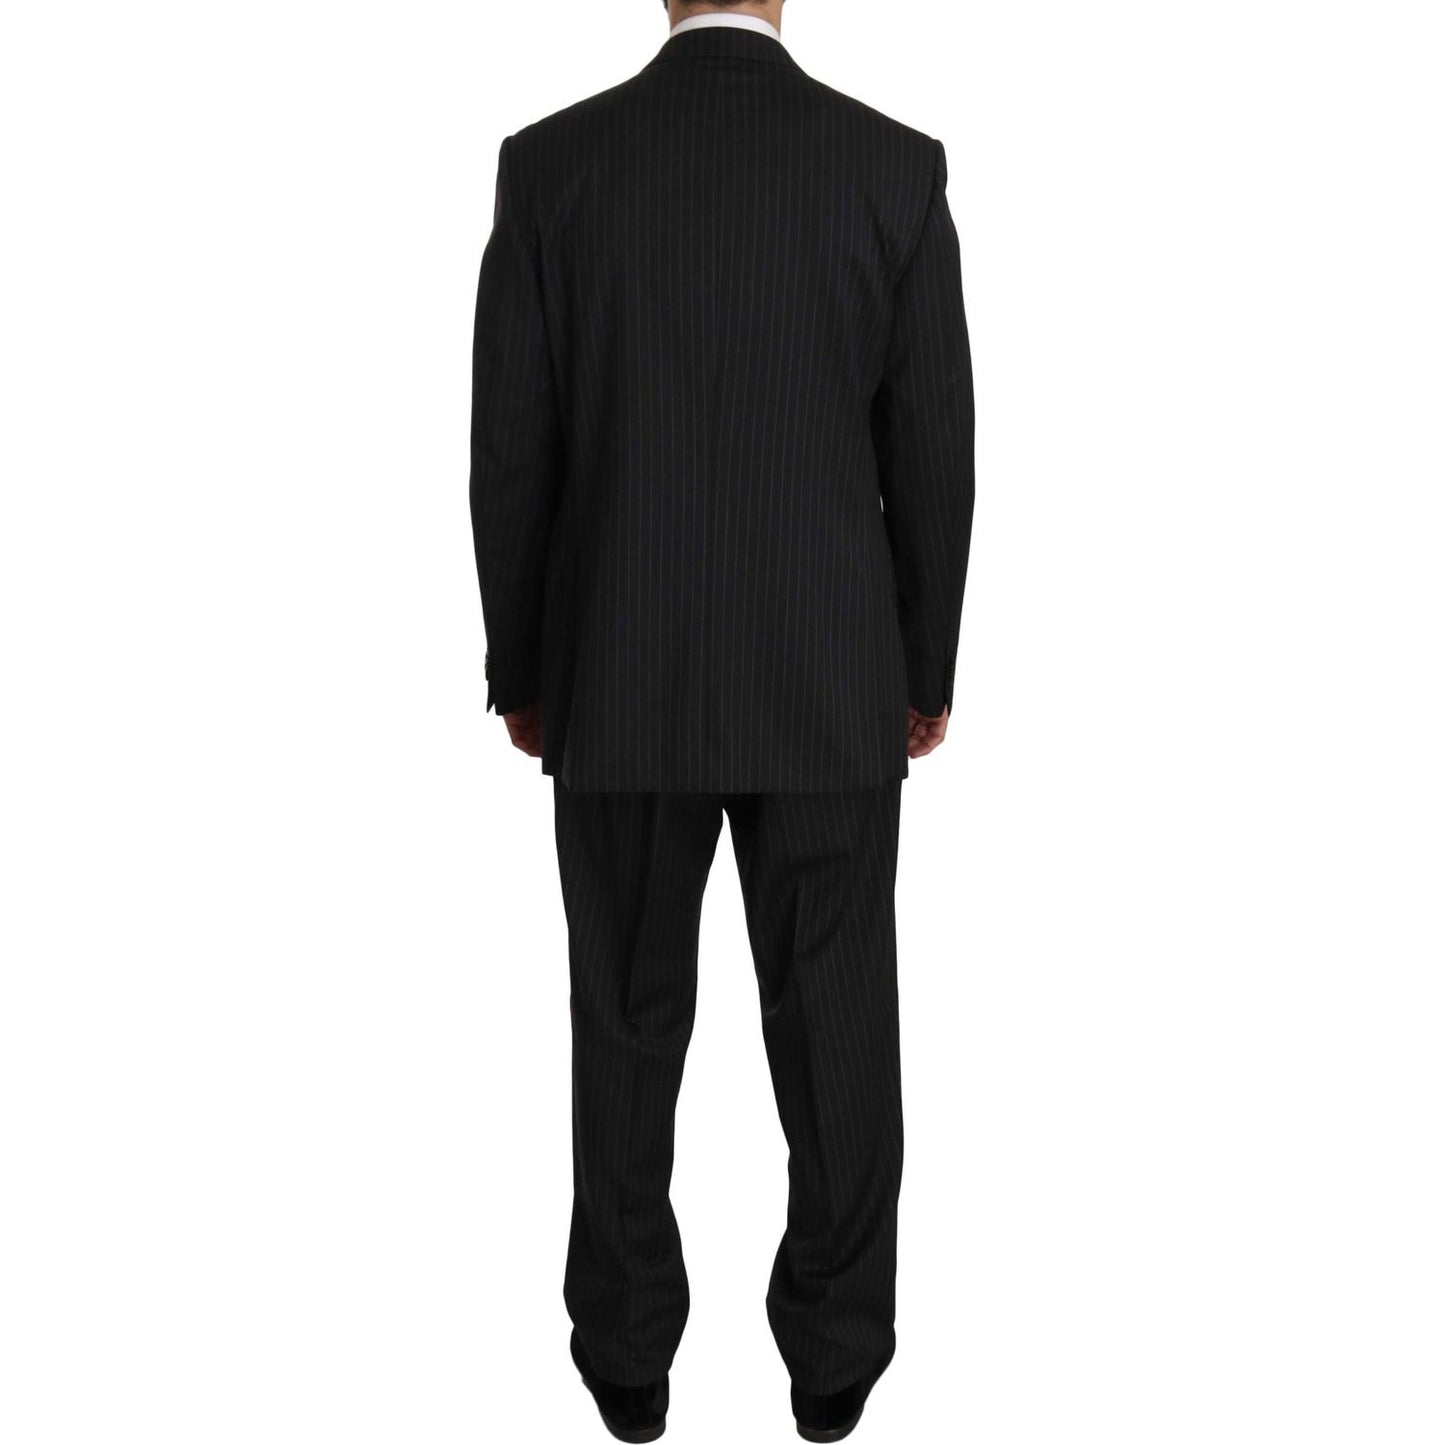 Z ZEGNA Elegant Black Striped Wool Suit Suit black-striped-two-piece-3-button-100-wool-suit IMG_7798-scaled.jpg